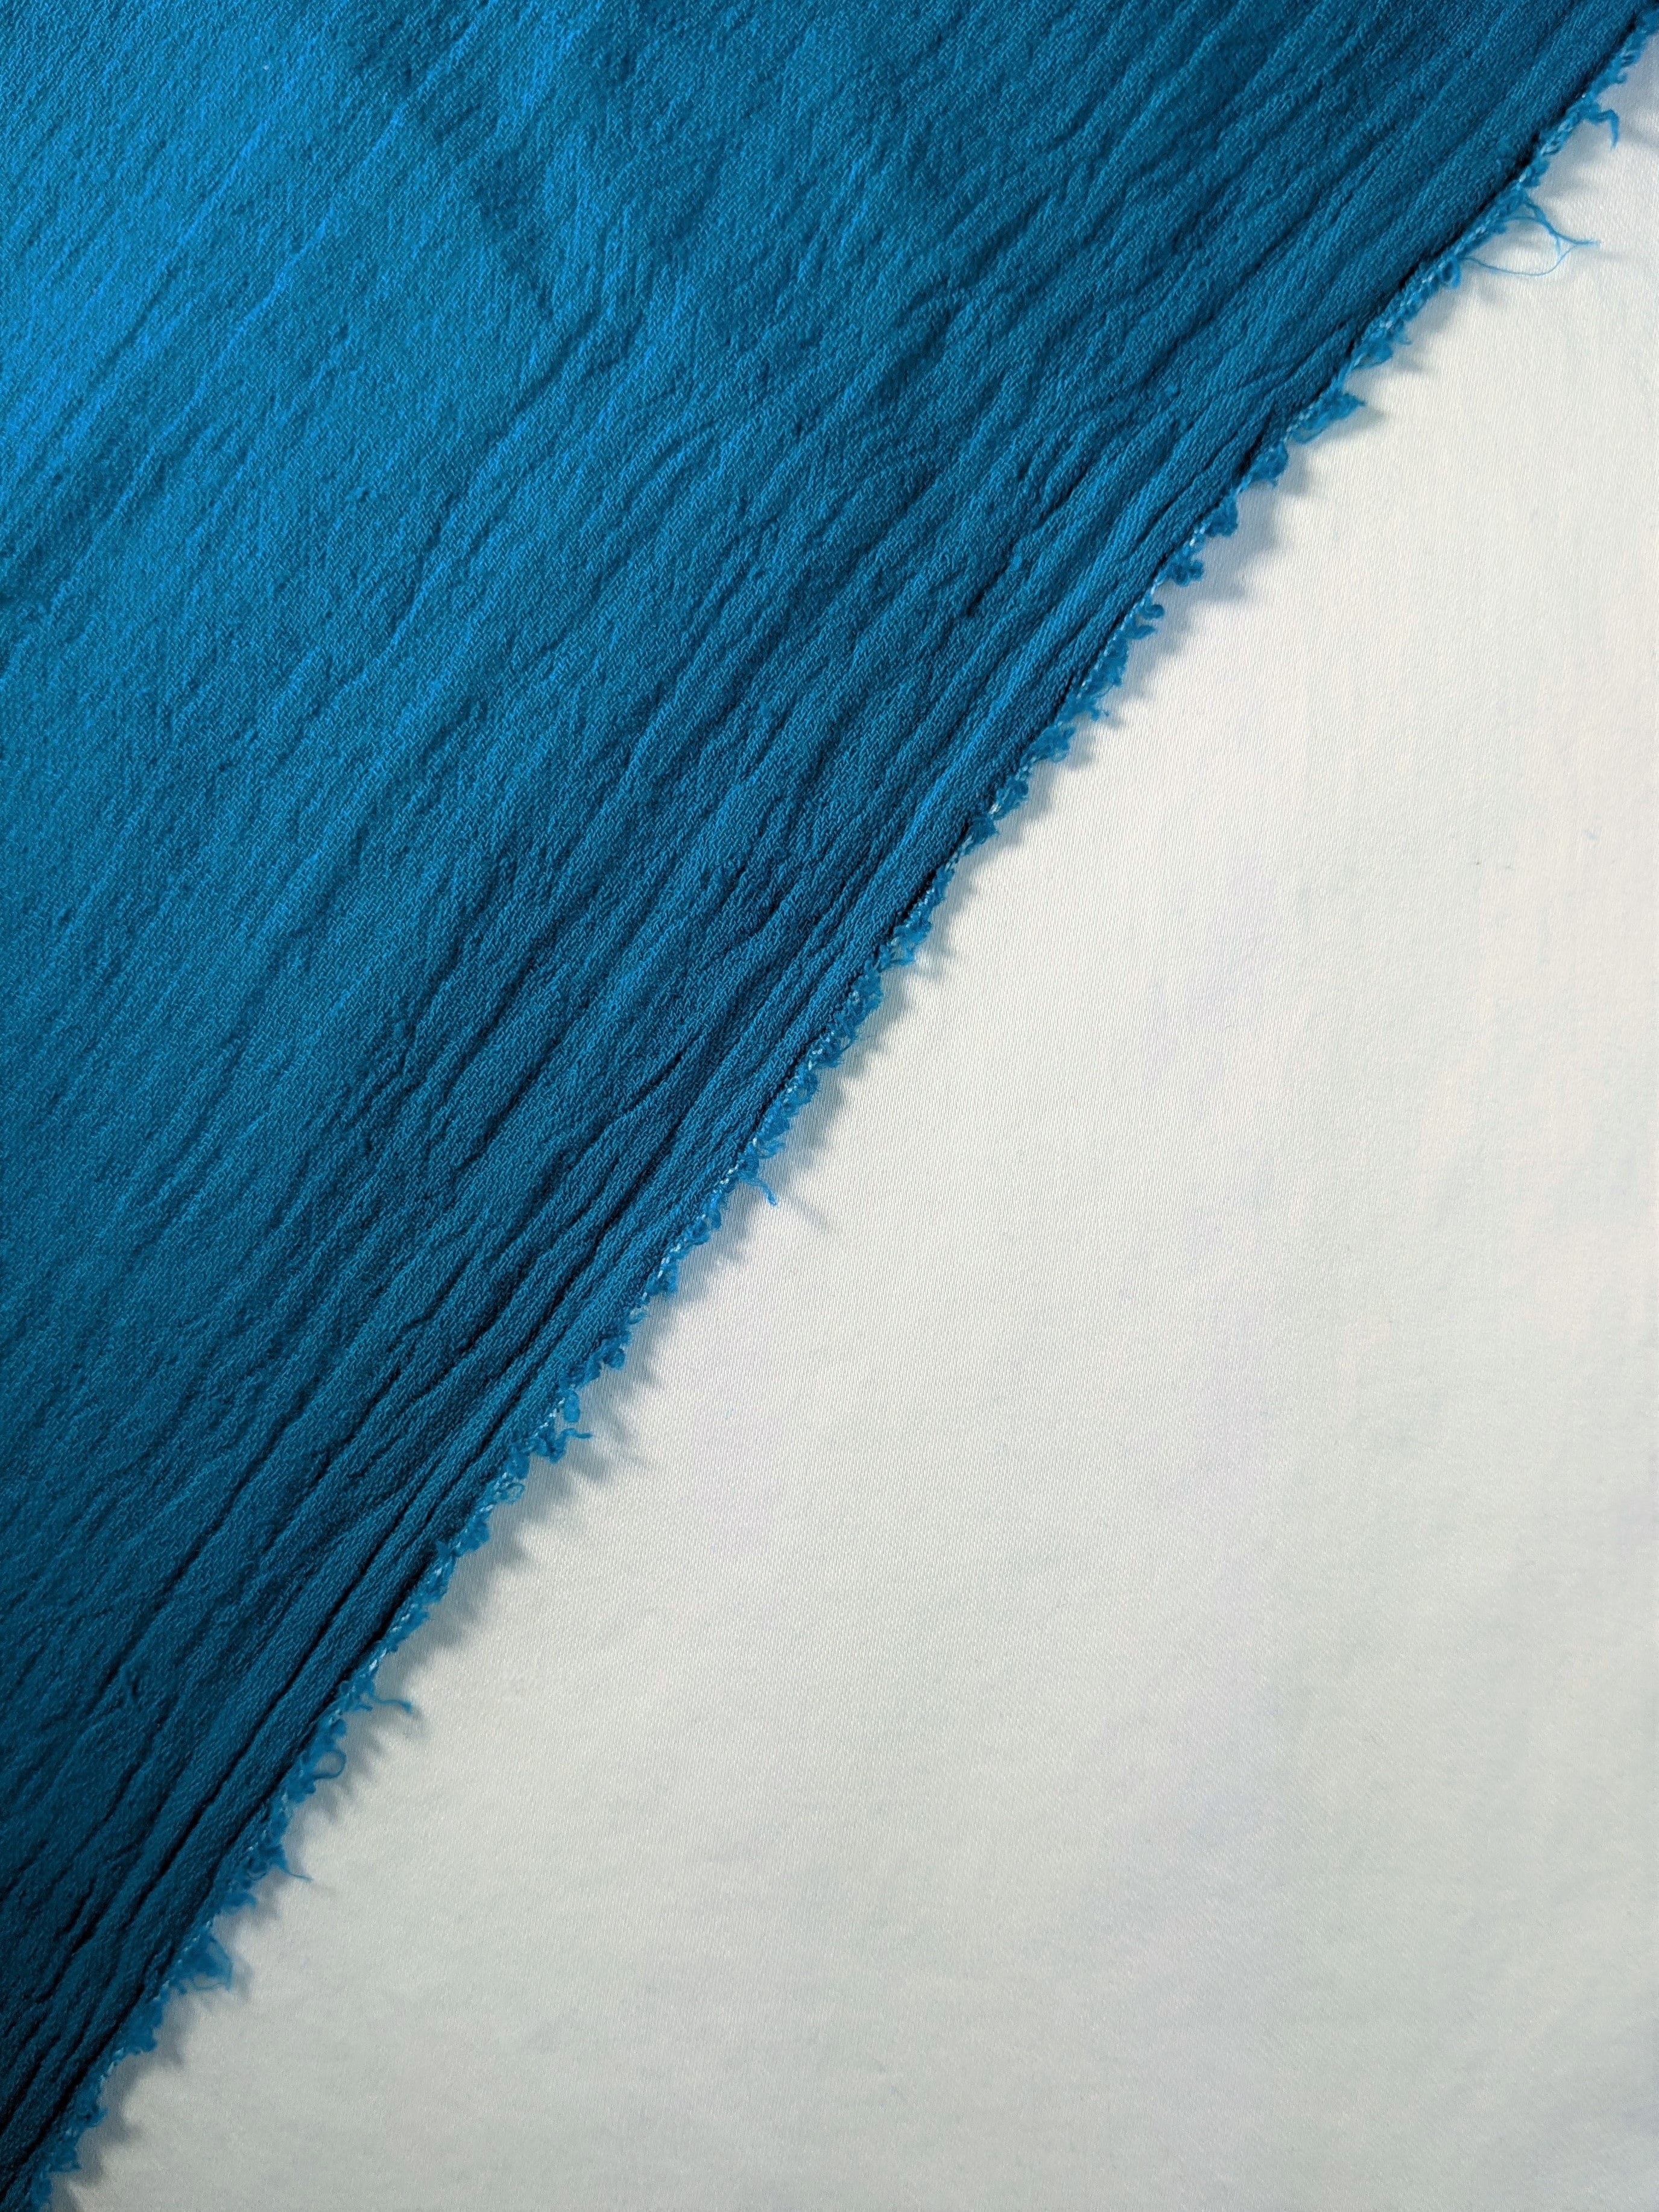 textures, texture, cloth, blue, surface cellphone